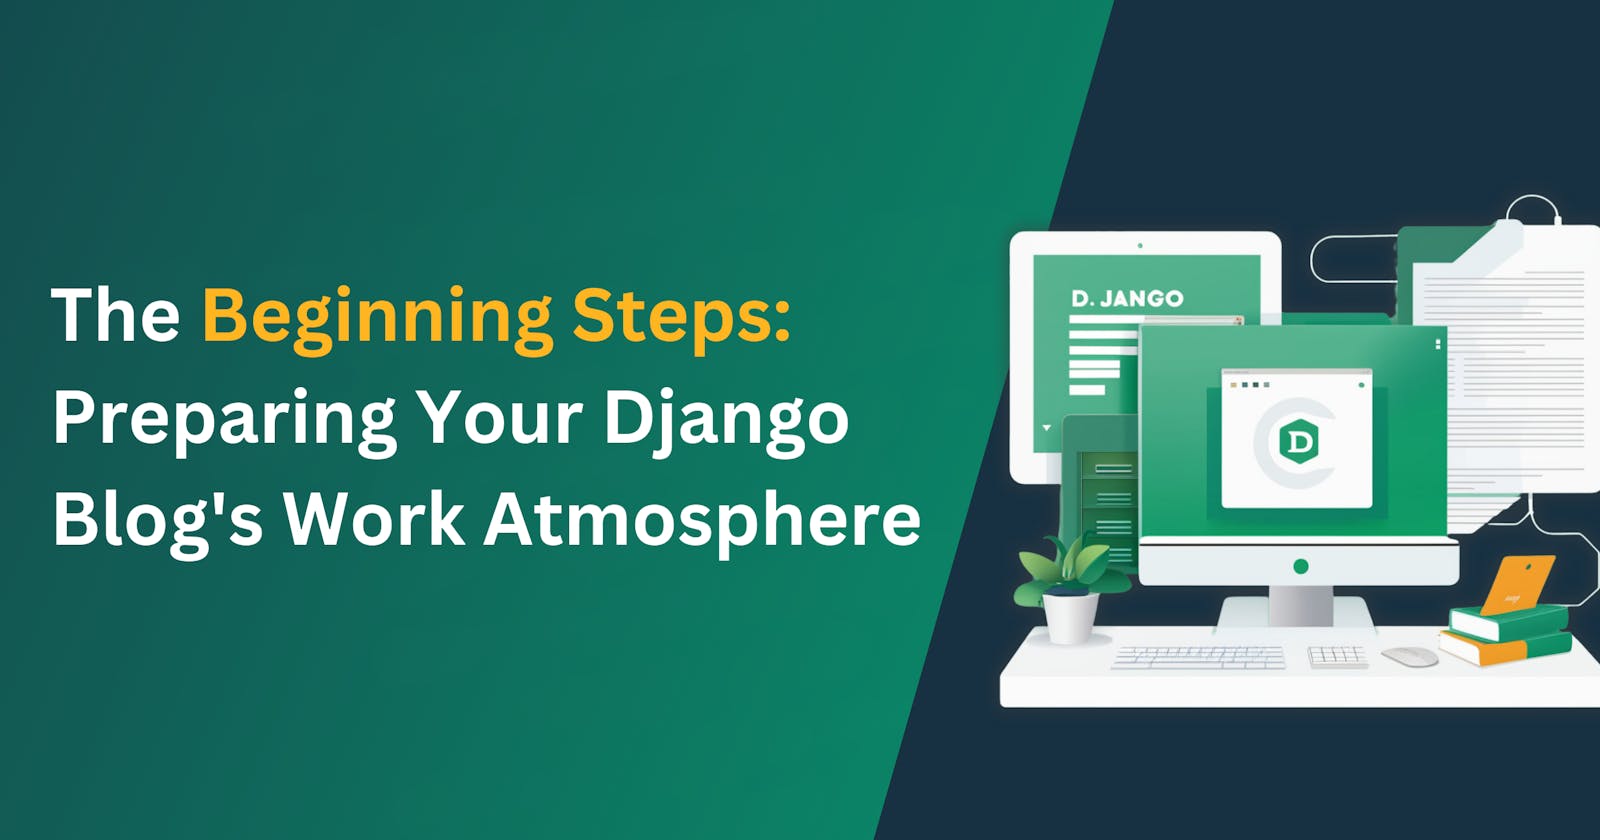 The Beginning Steps: Preparing Your Django Blog's Work Atmosphere